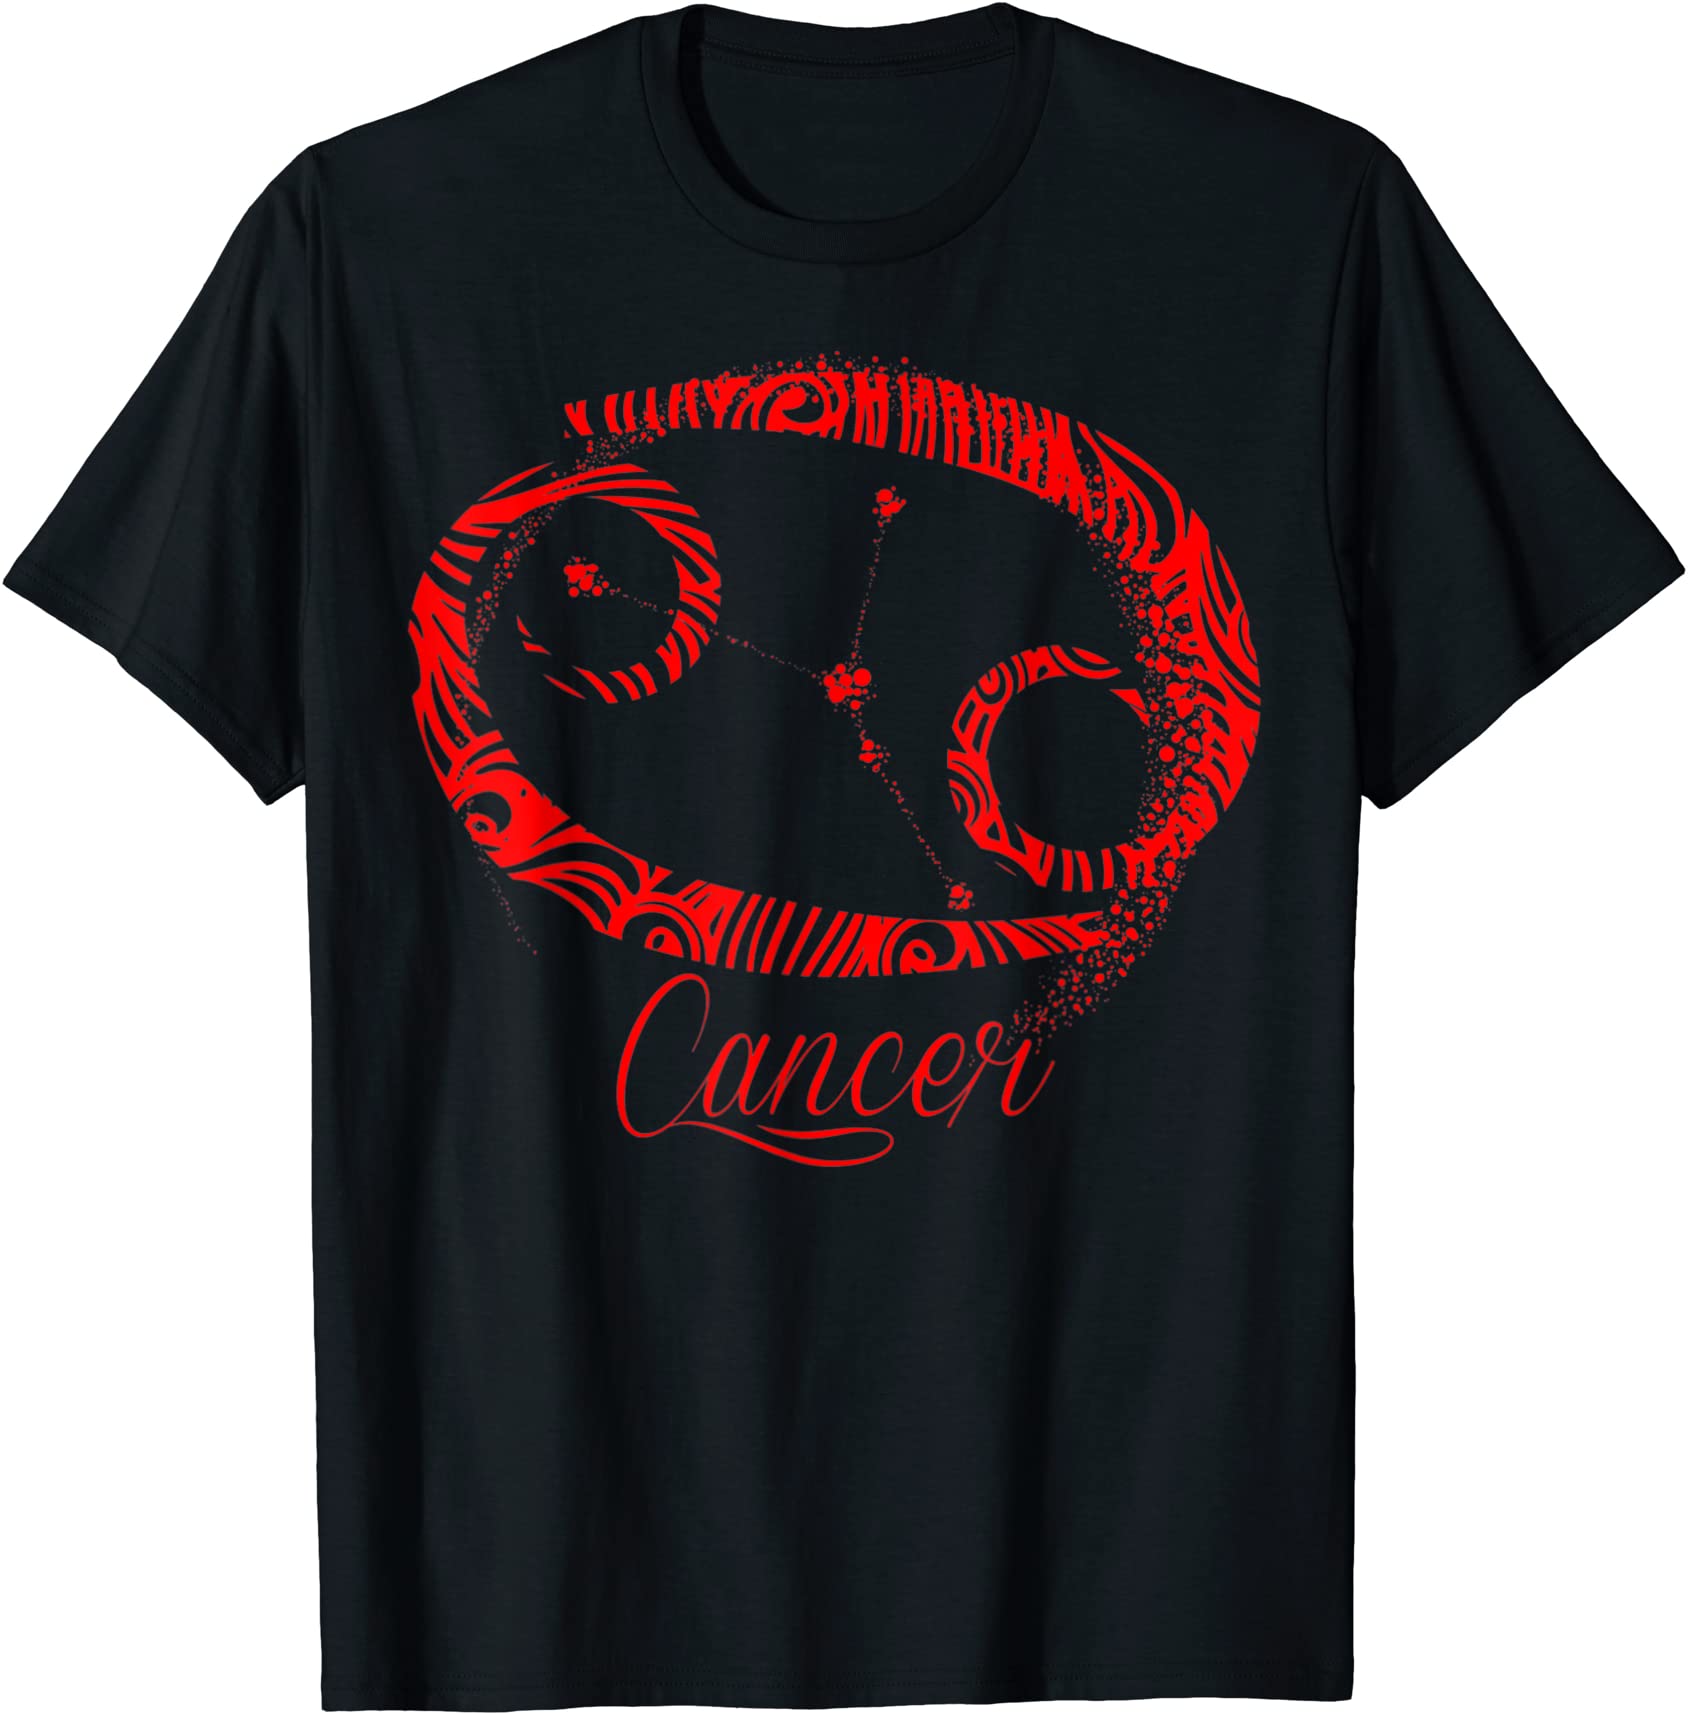 cancer zodiac sign symbol stars june july birthday t shirt men - Buy t ...